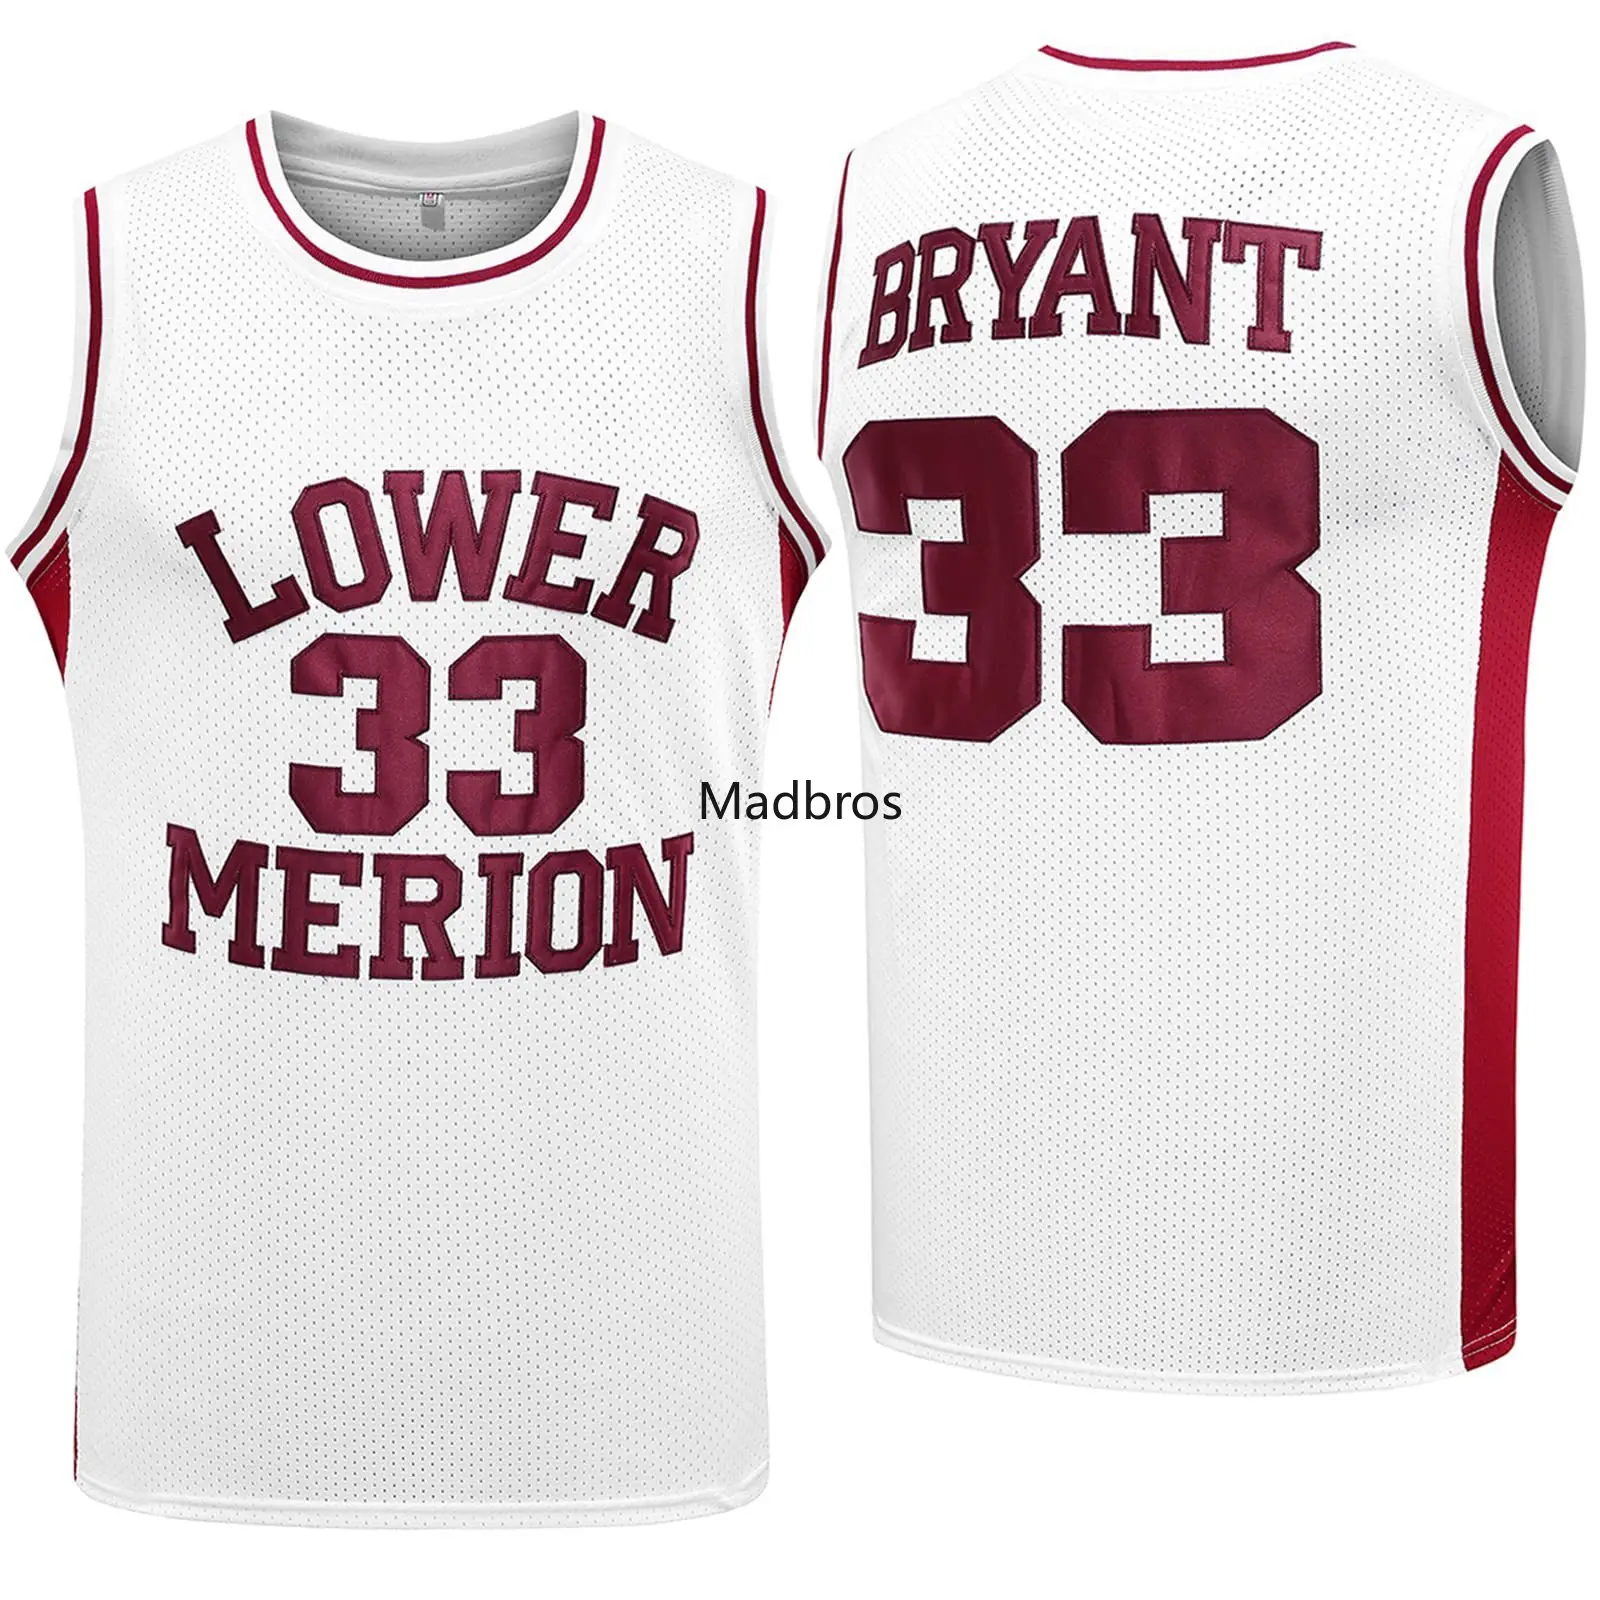 Kobe Bryant Jersey 33 Lower Merion Basketball Jersey Retro High School Mens  Shirt All Stitched Us Size S-XXXL